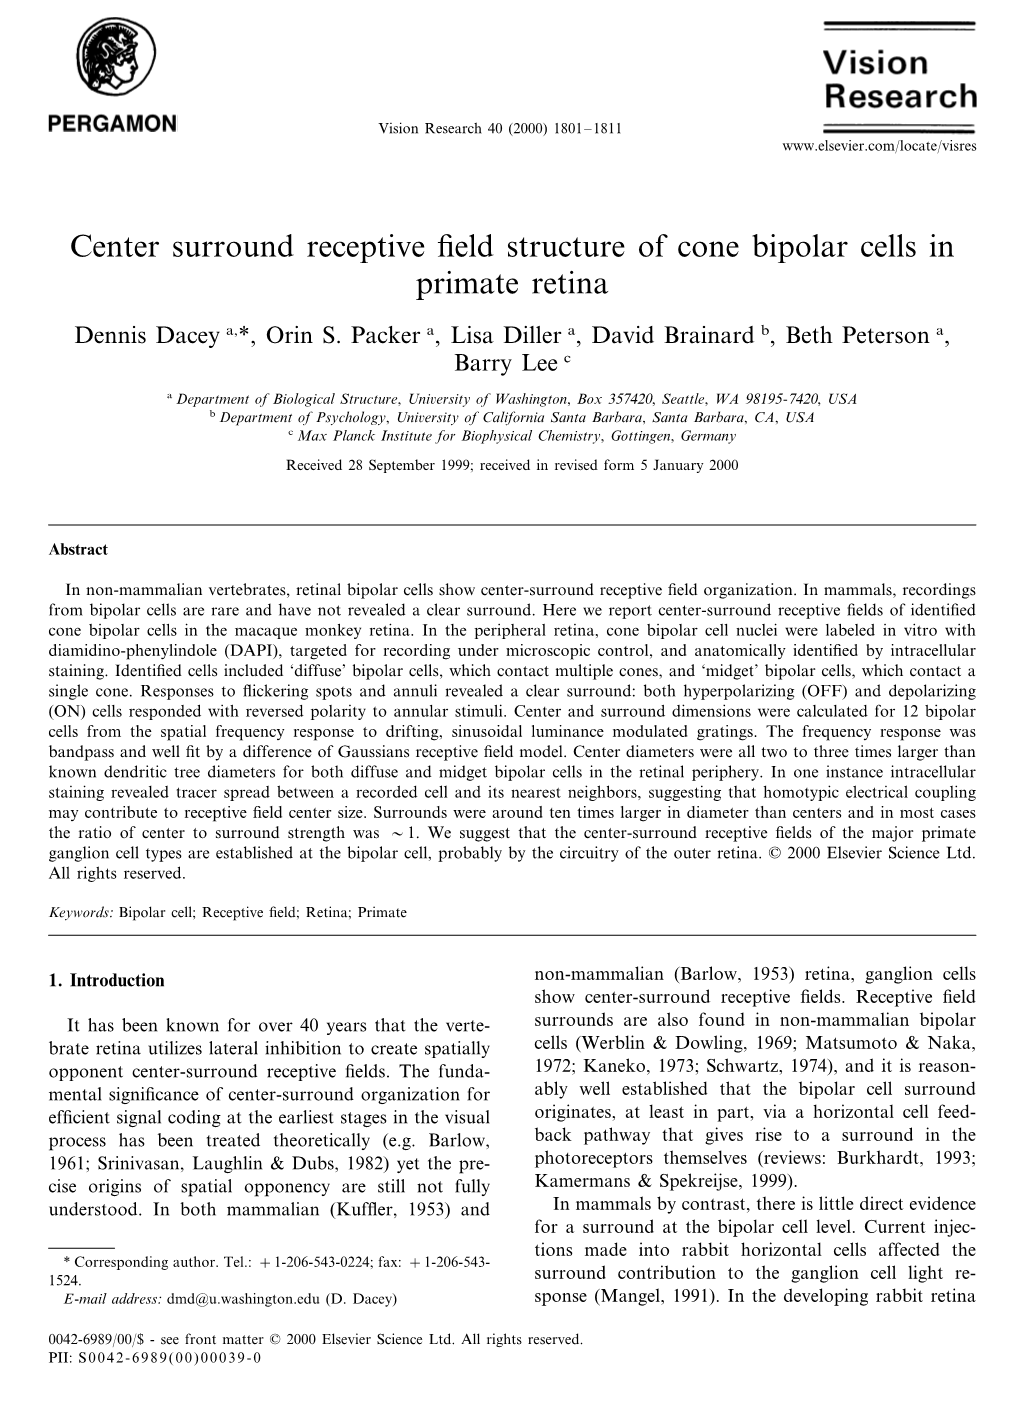 Center Surround Receptive Field Structure of Cone Bipolar Cells In